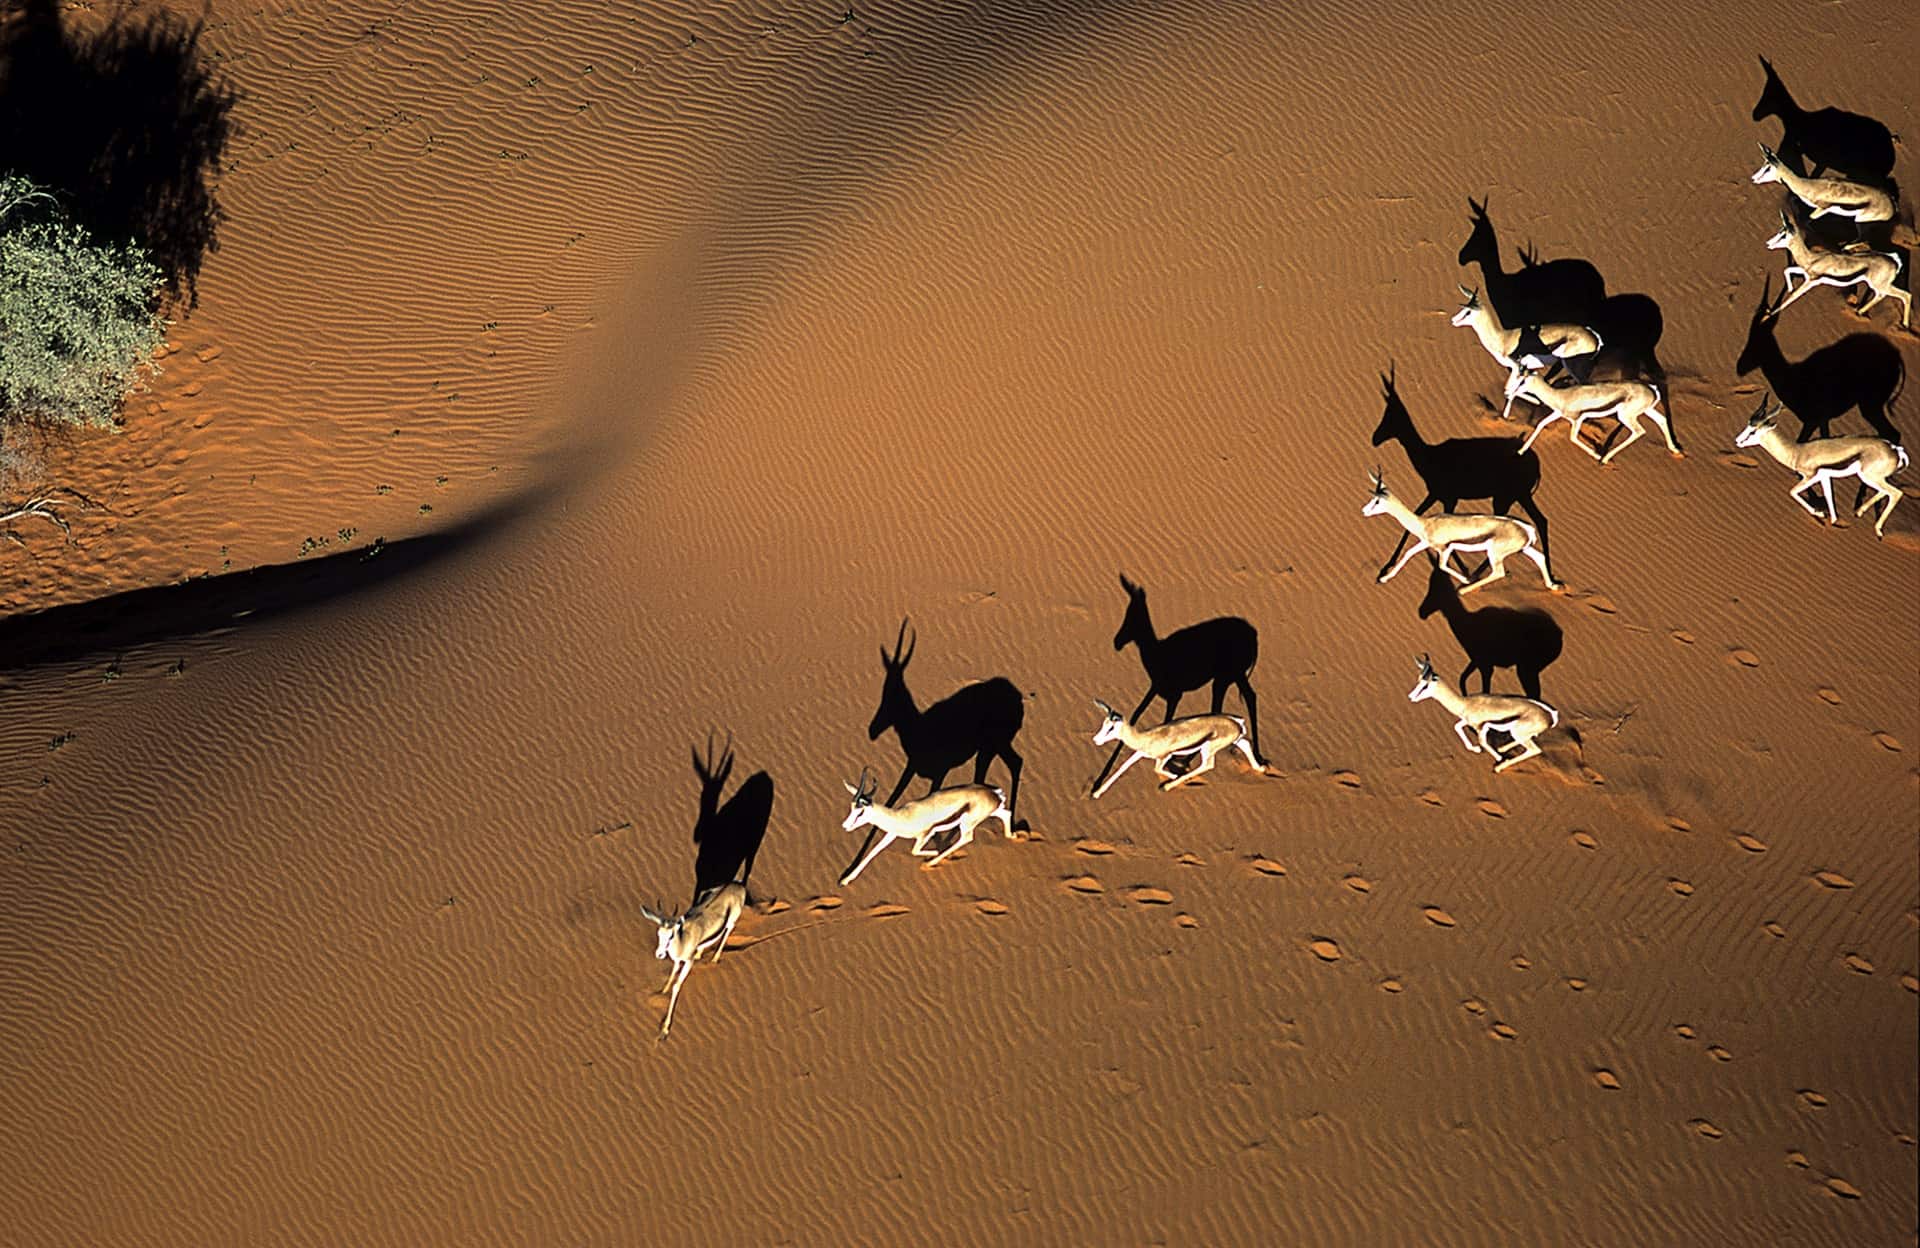 Springböcke in der Kalahari, Namibia